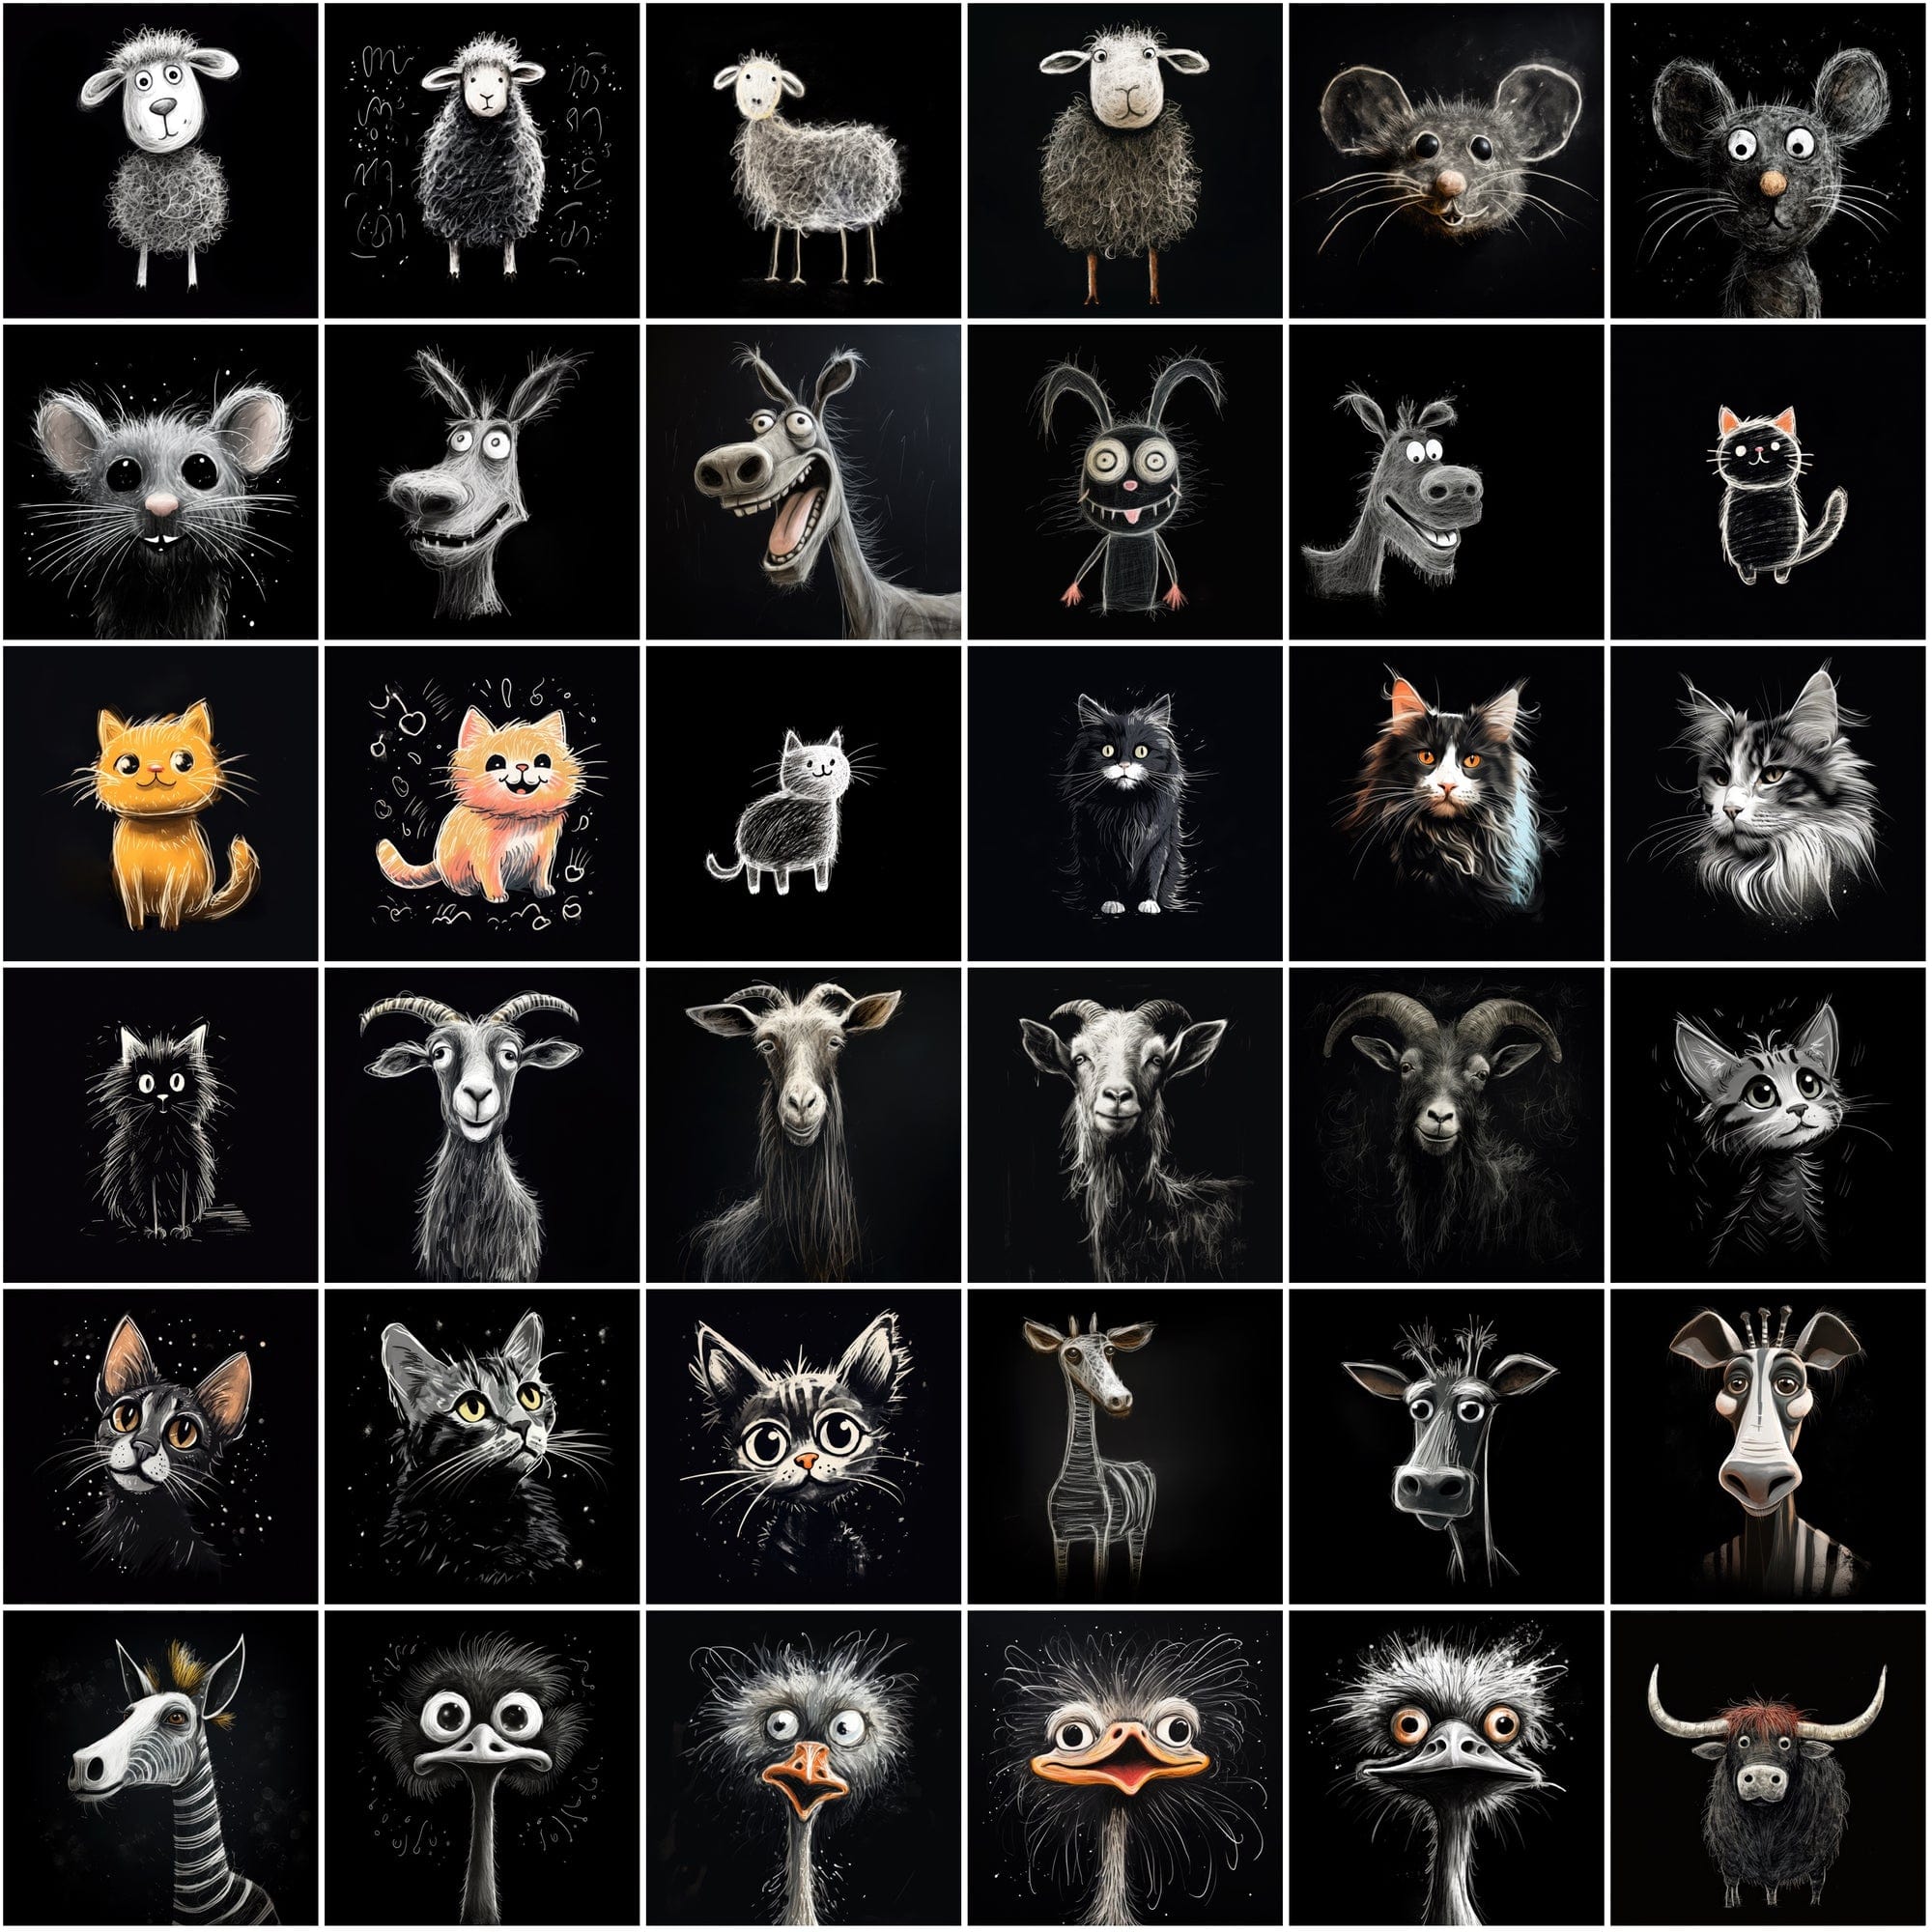 500 Chalk Animal Illustrations - High-Resolution PNG, Commercial License Included Digital Download Sumobundle